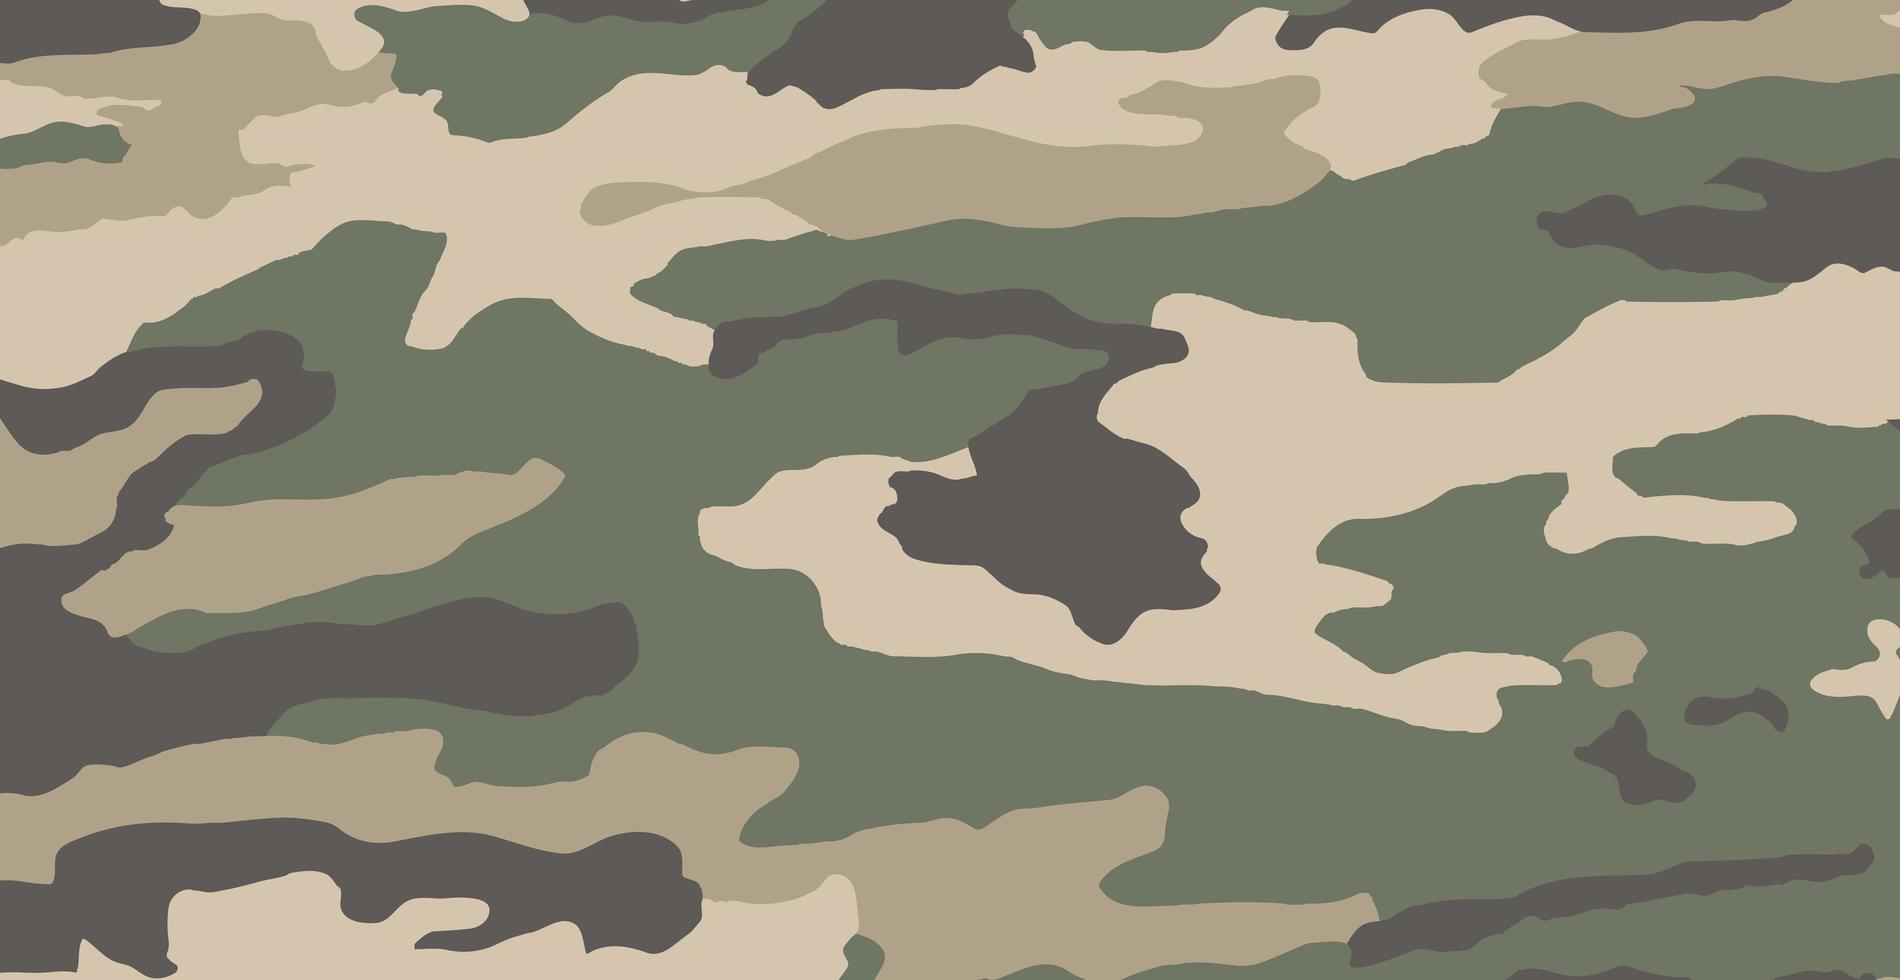 panoramautsikt bakgrund textur armé khaki kamouflage - vektor